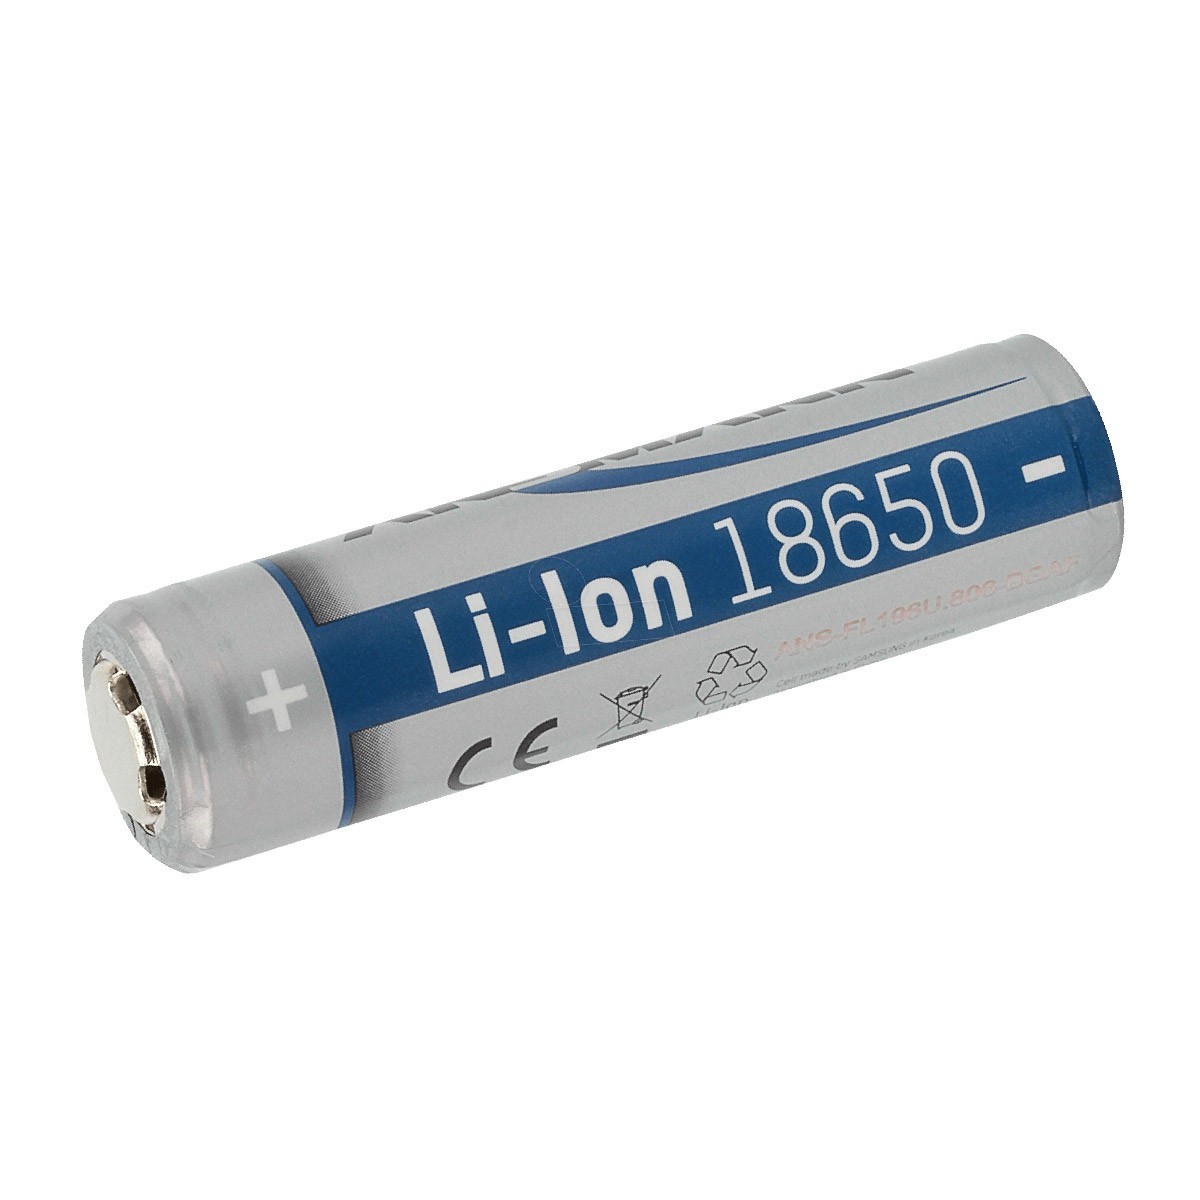 ANSMANN ANS 18650 PCB Lithium-Ion Accumulator 18650 Rechargeable Battery 3.6V 2600mAh